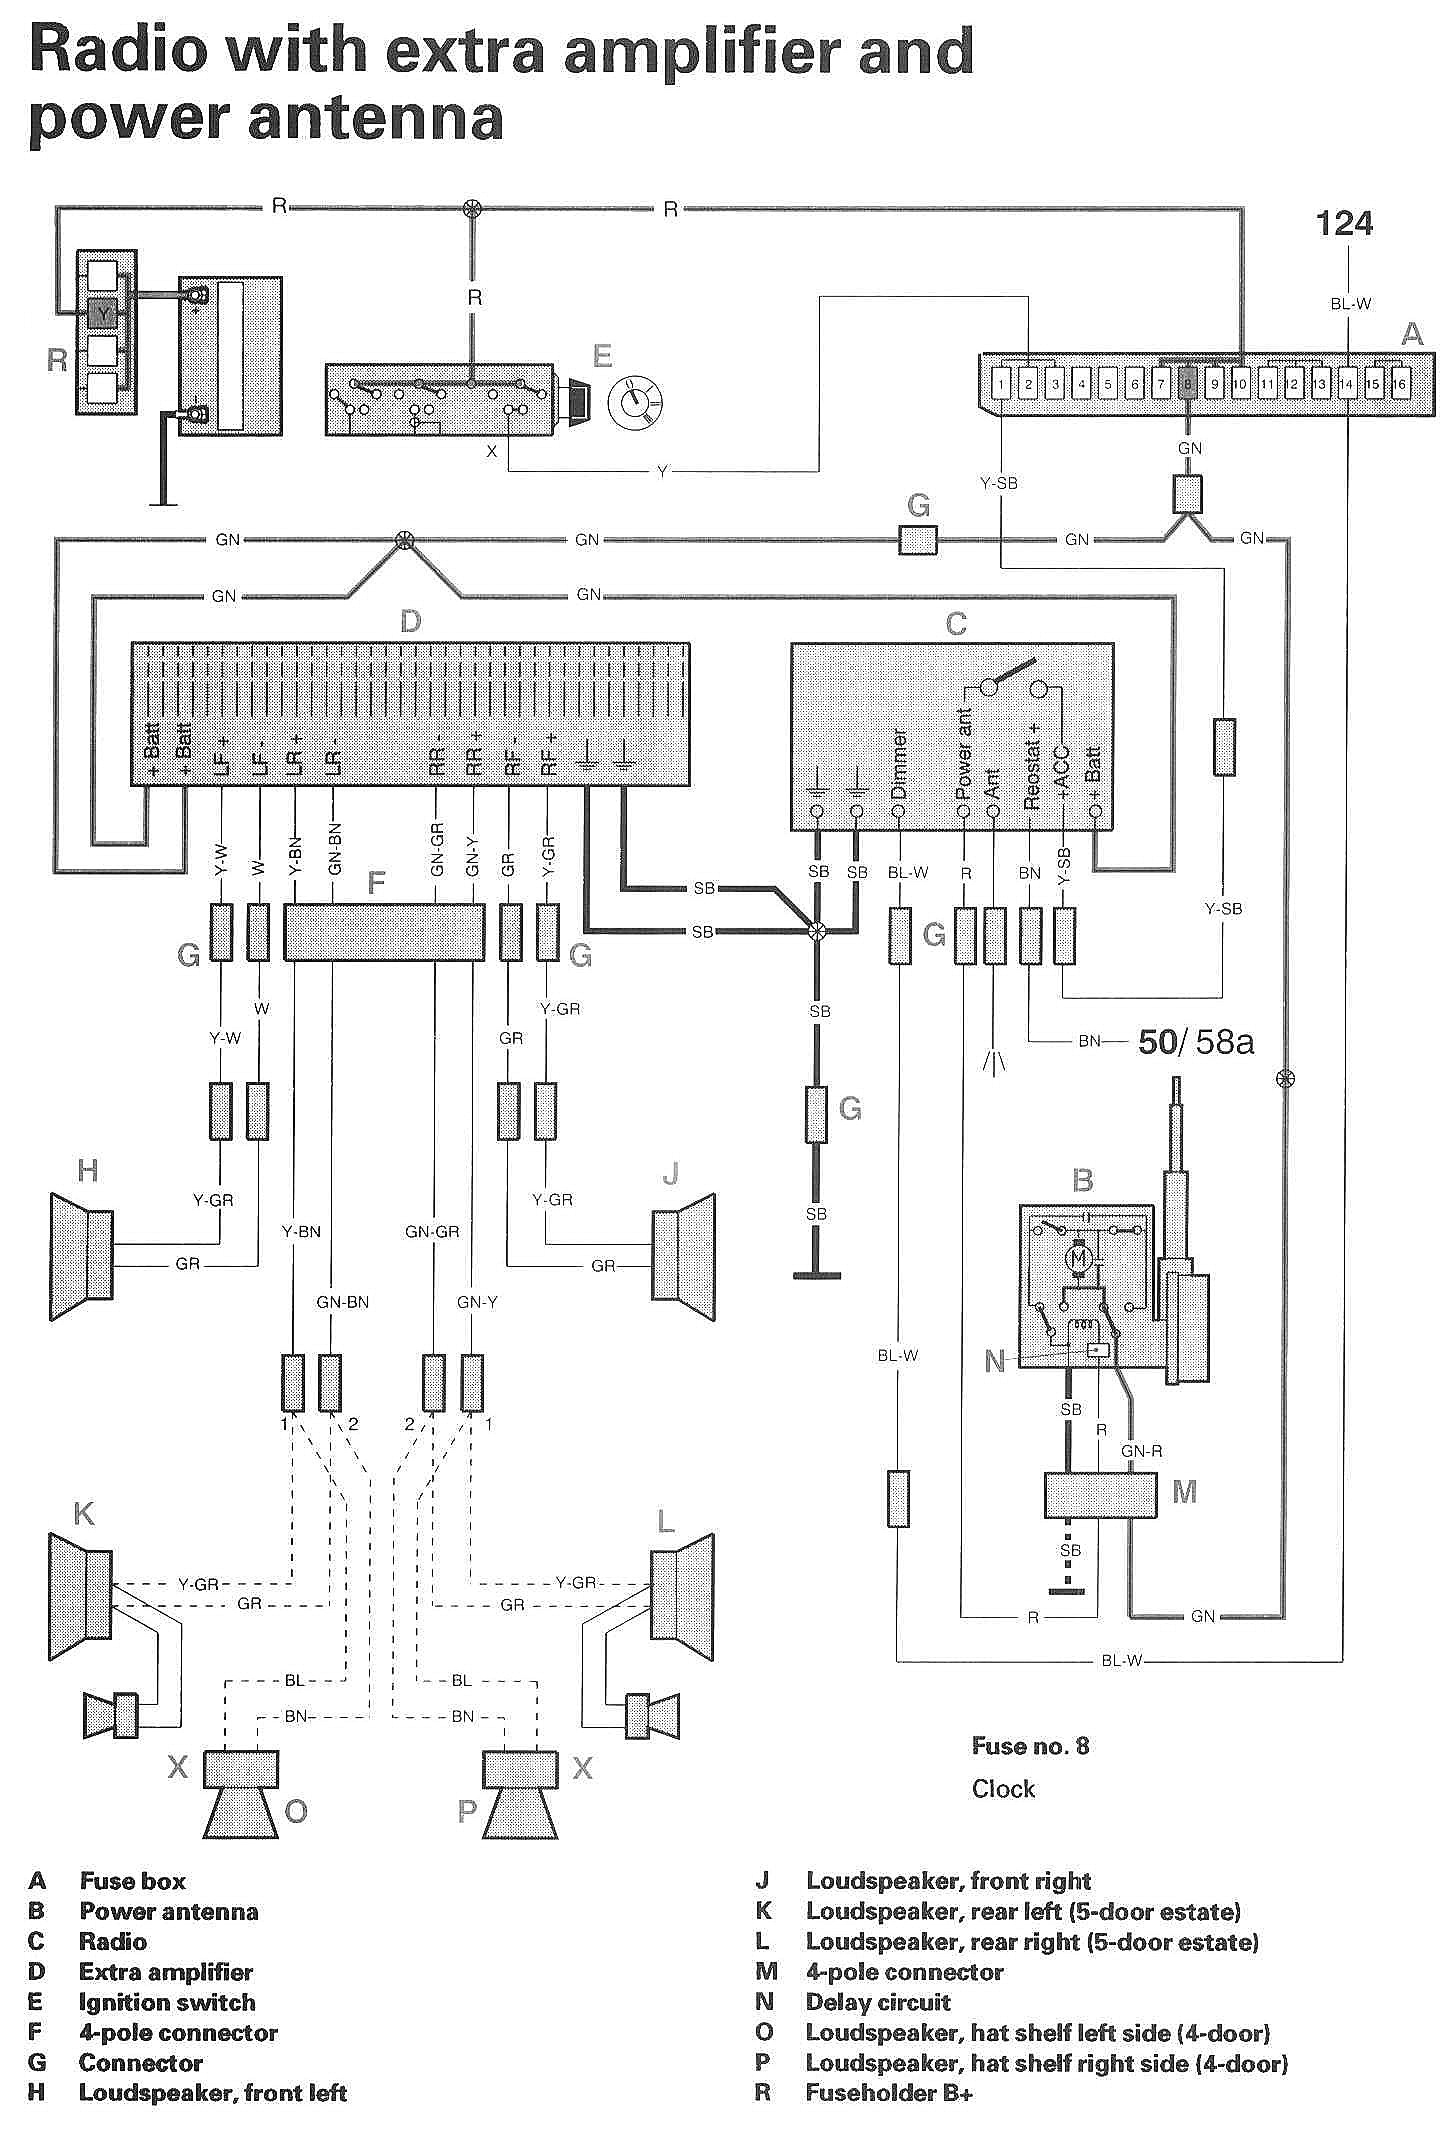 volvo 850 wire harness wiring diagram 1996 volvo 850 radio wiring diagram volvo 850 radio wiring